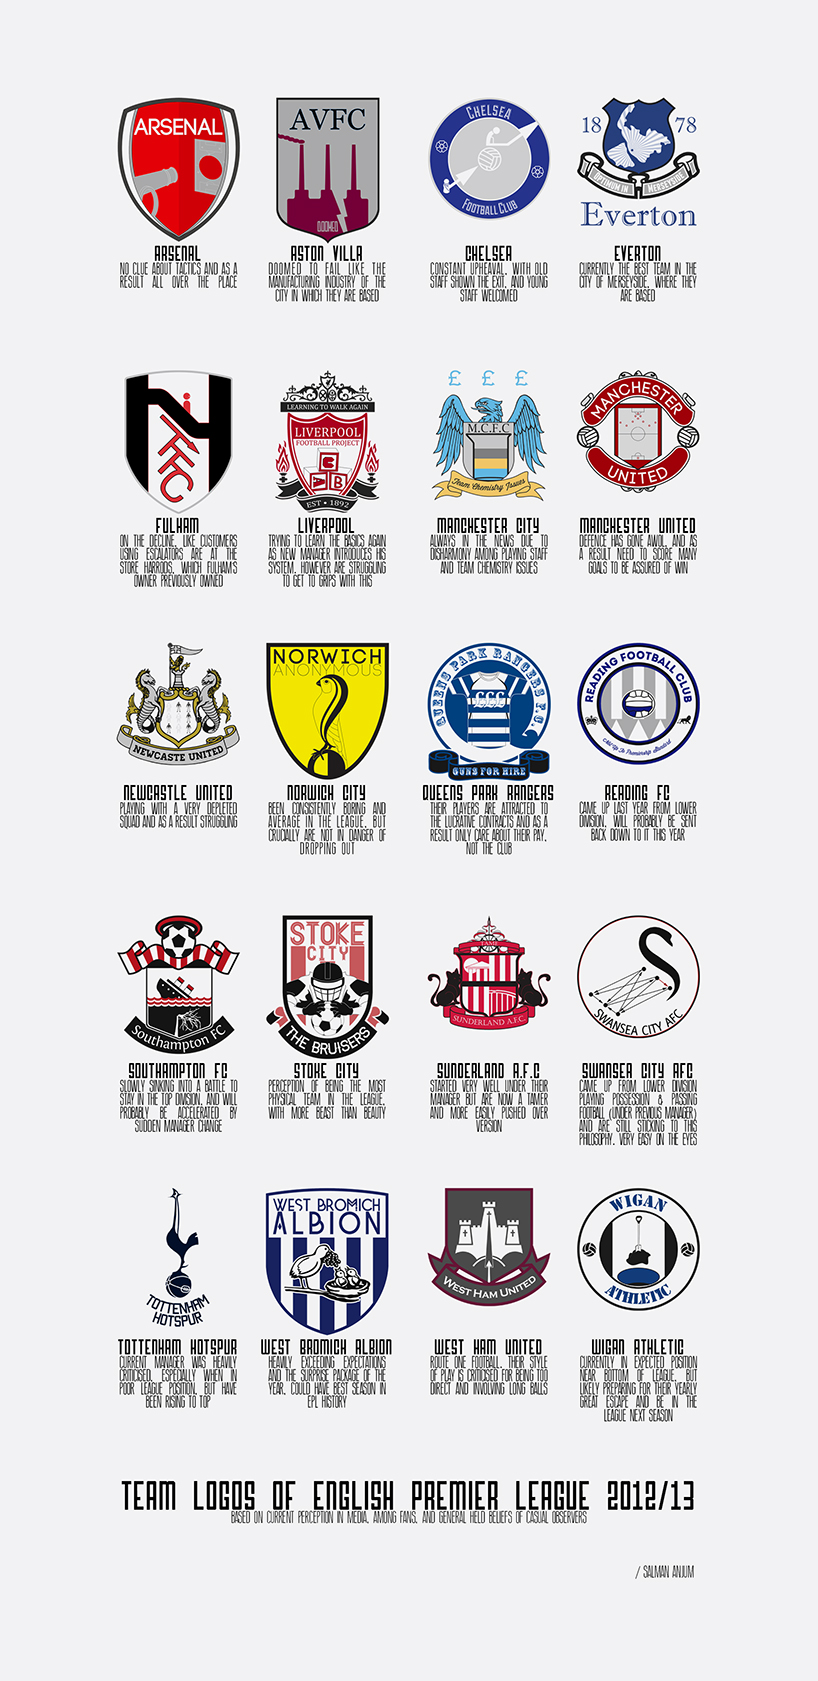 re imagining english premier league football team logos